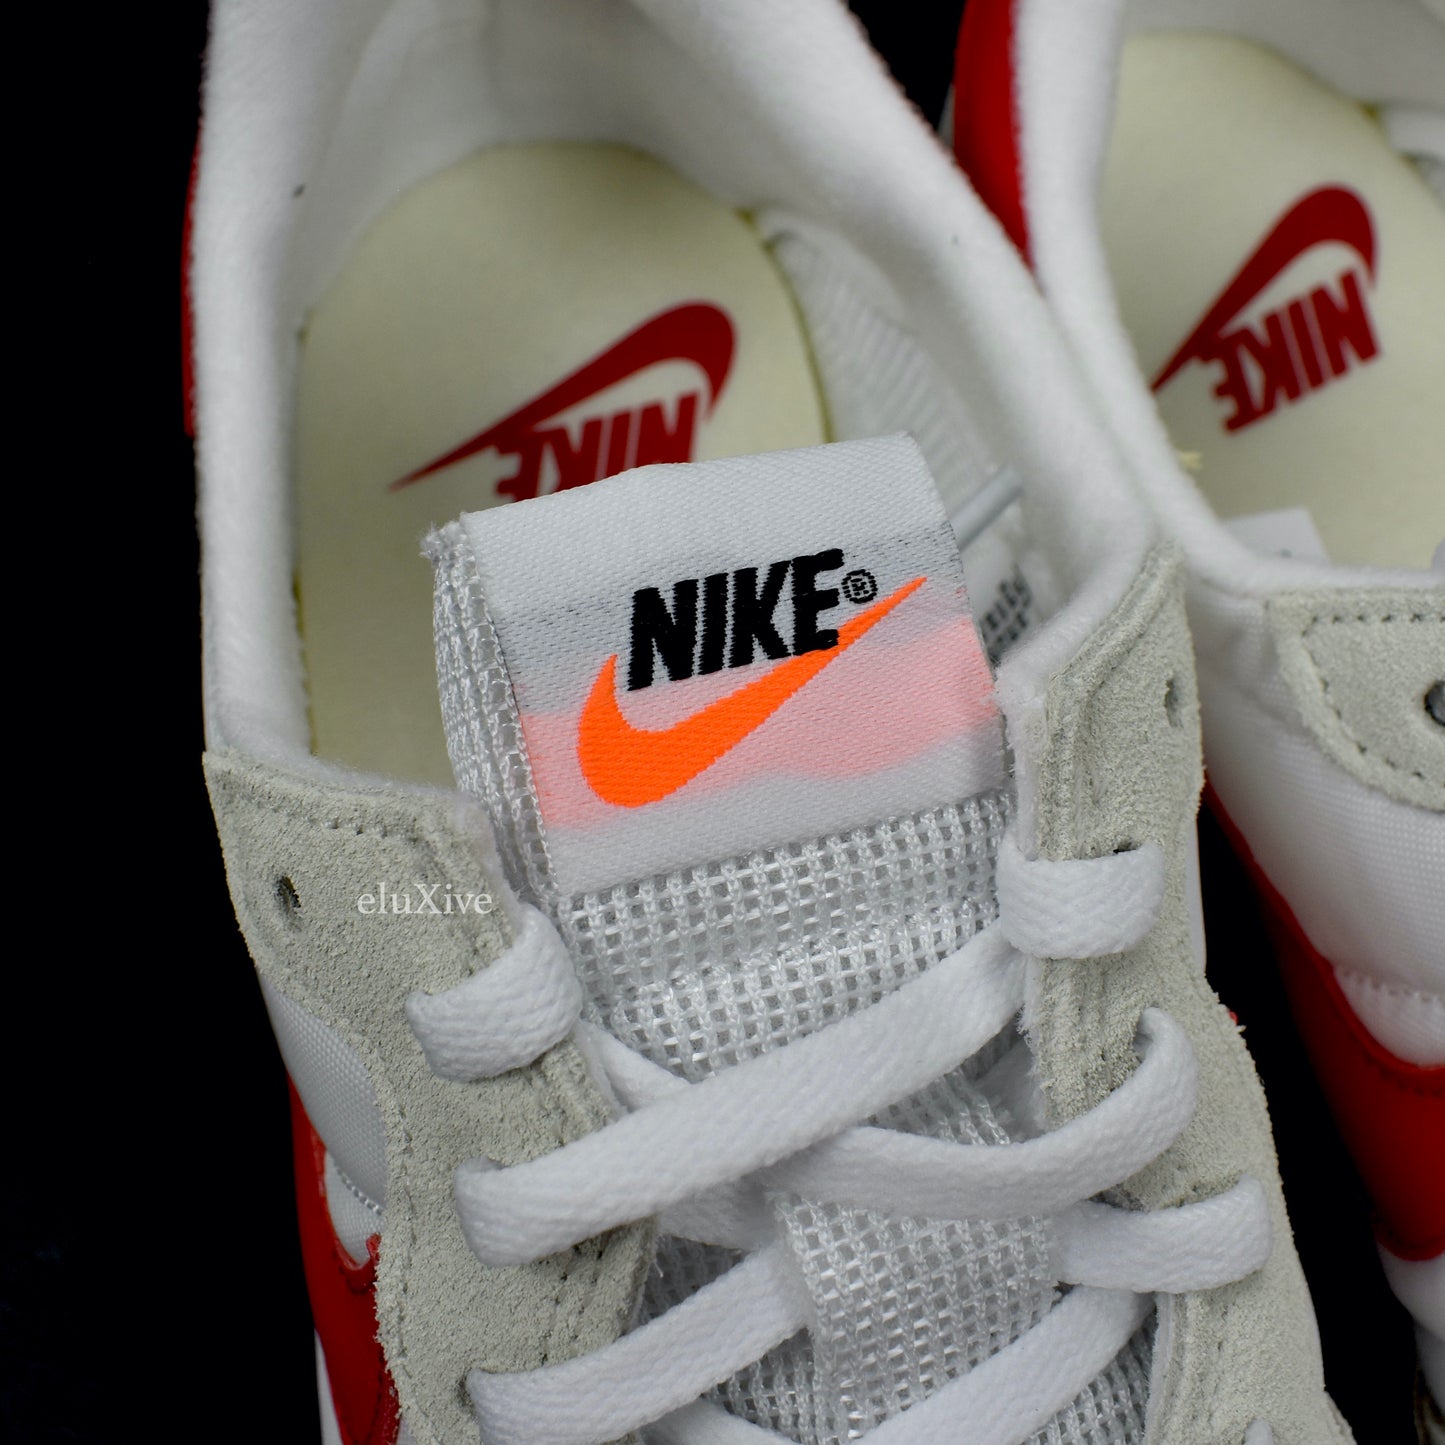 Nike - Challenger OG Waffle Sneakers (White/University Red)